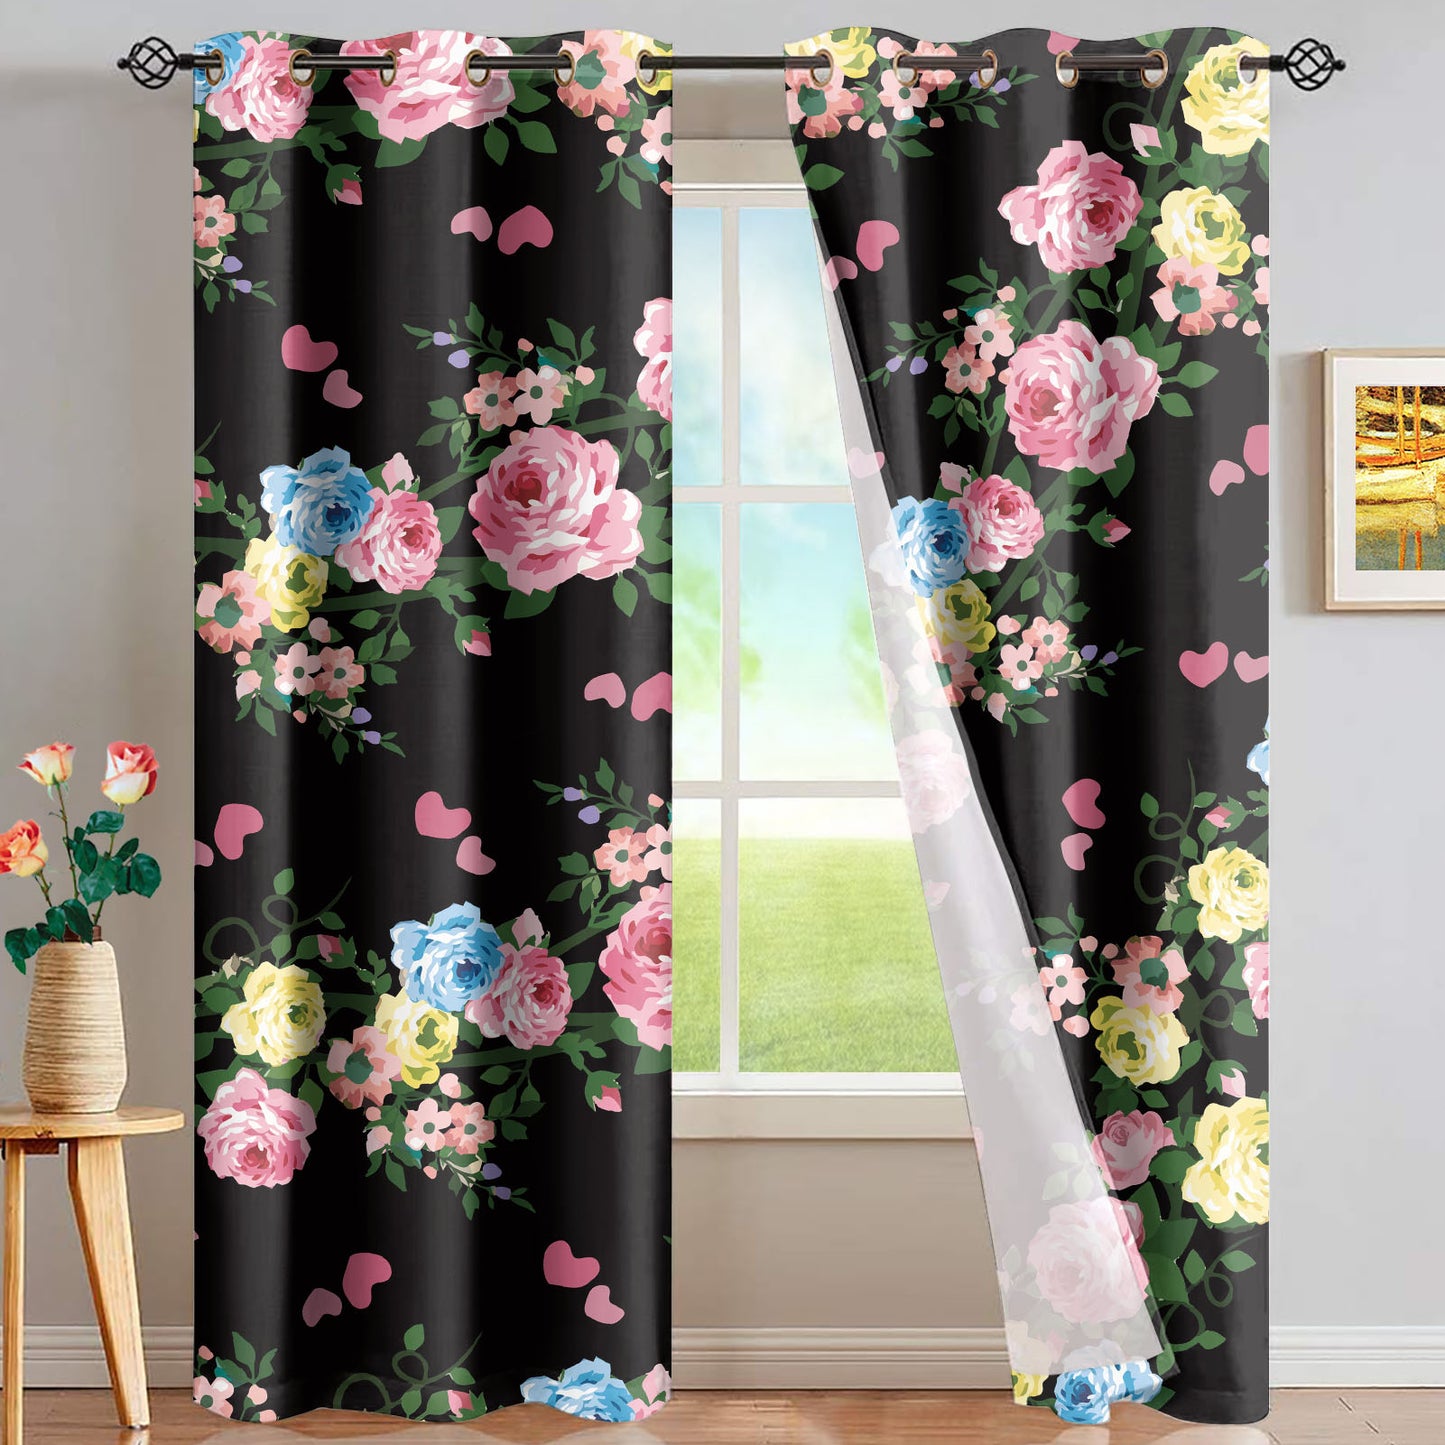 Floral Black Pink Chrysanthemum Print Window Curtains